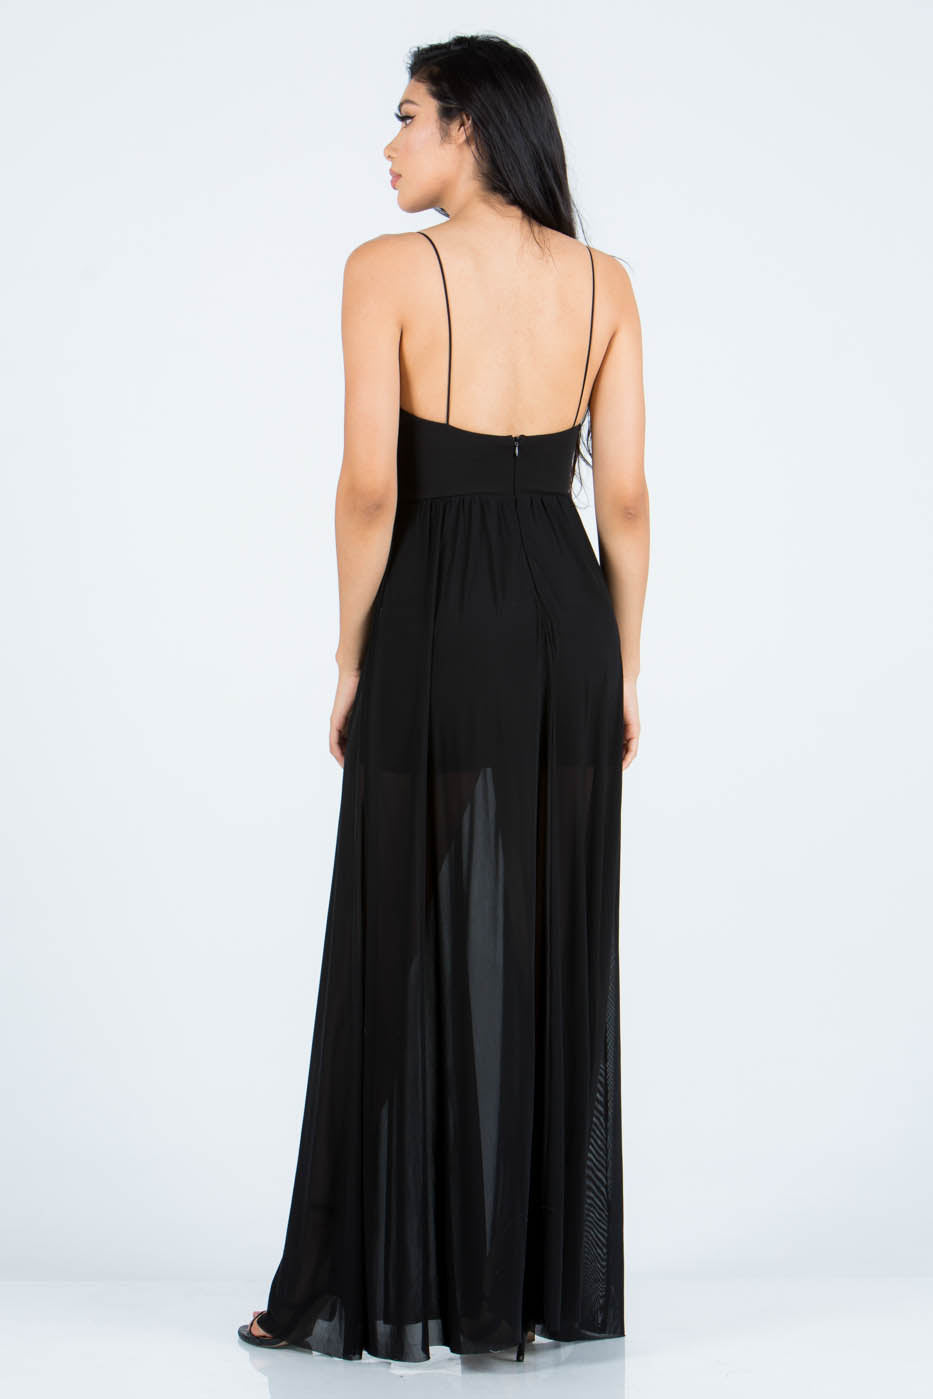 Elegant Strap V-Neck Crystal Black Maxi Dress